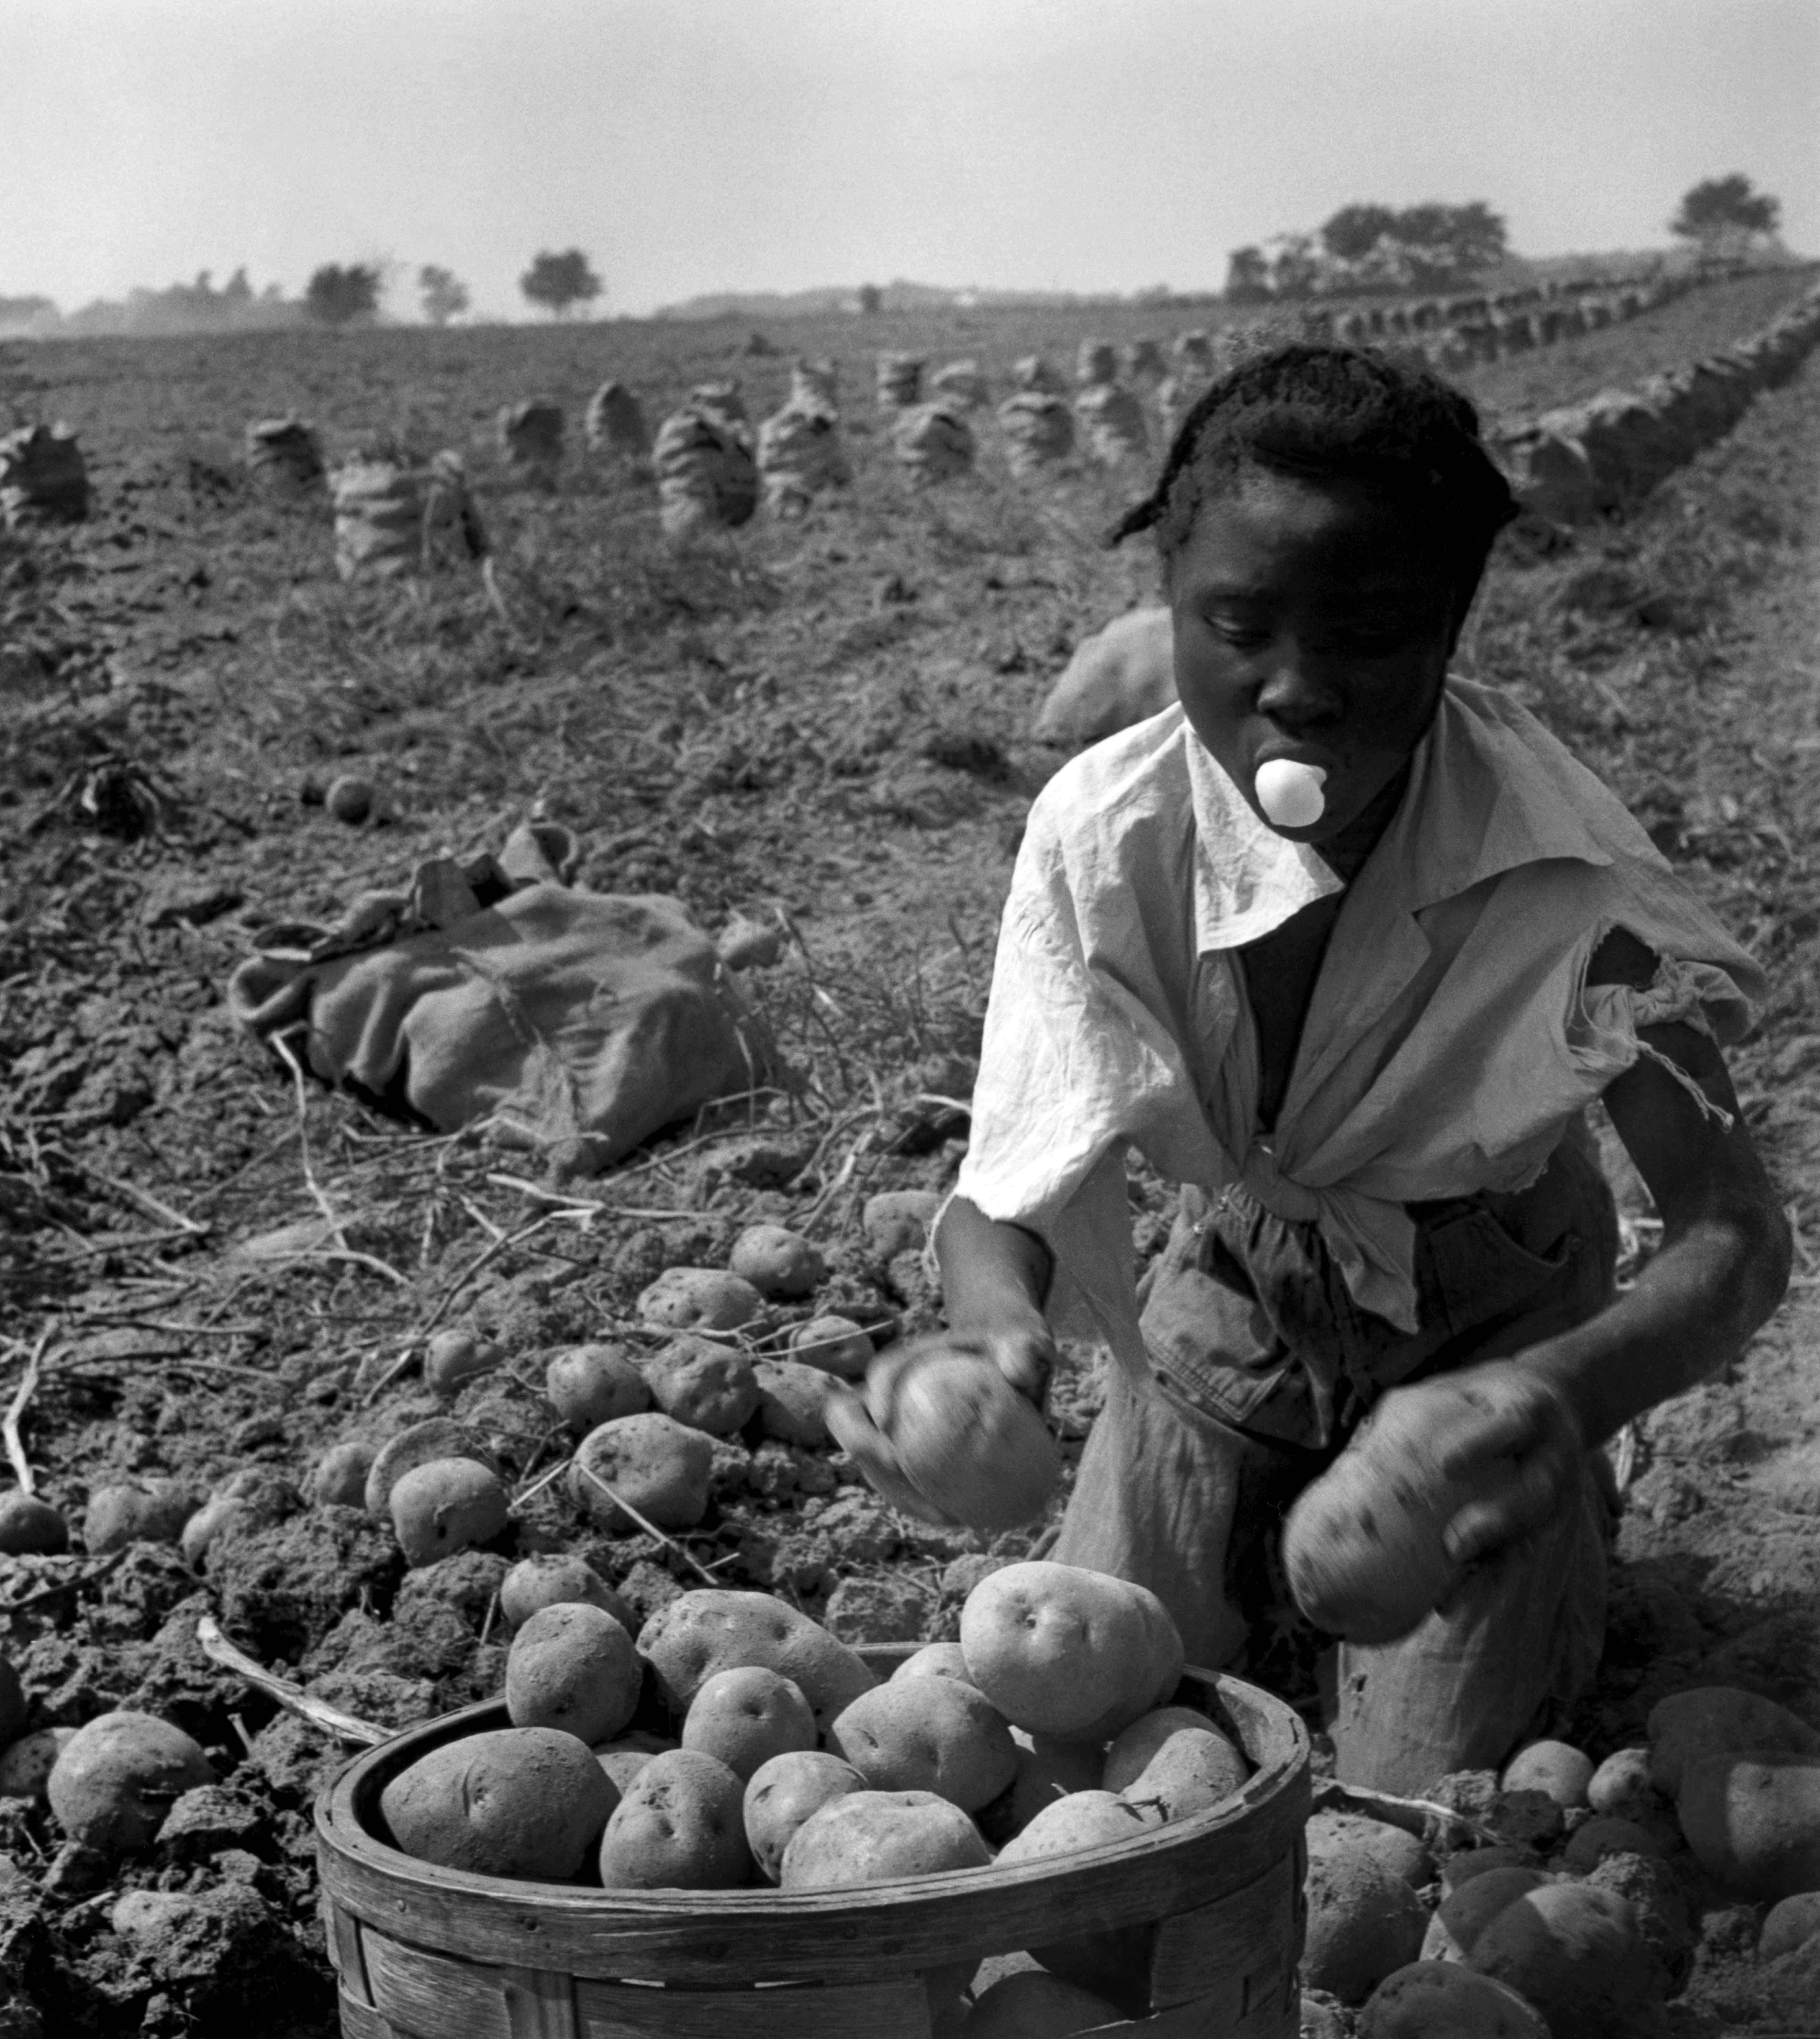 Migrant potato picker, Long Island, New York, USA, 1951 © Eve Arnold / Magnum Photos